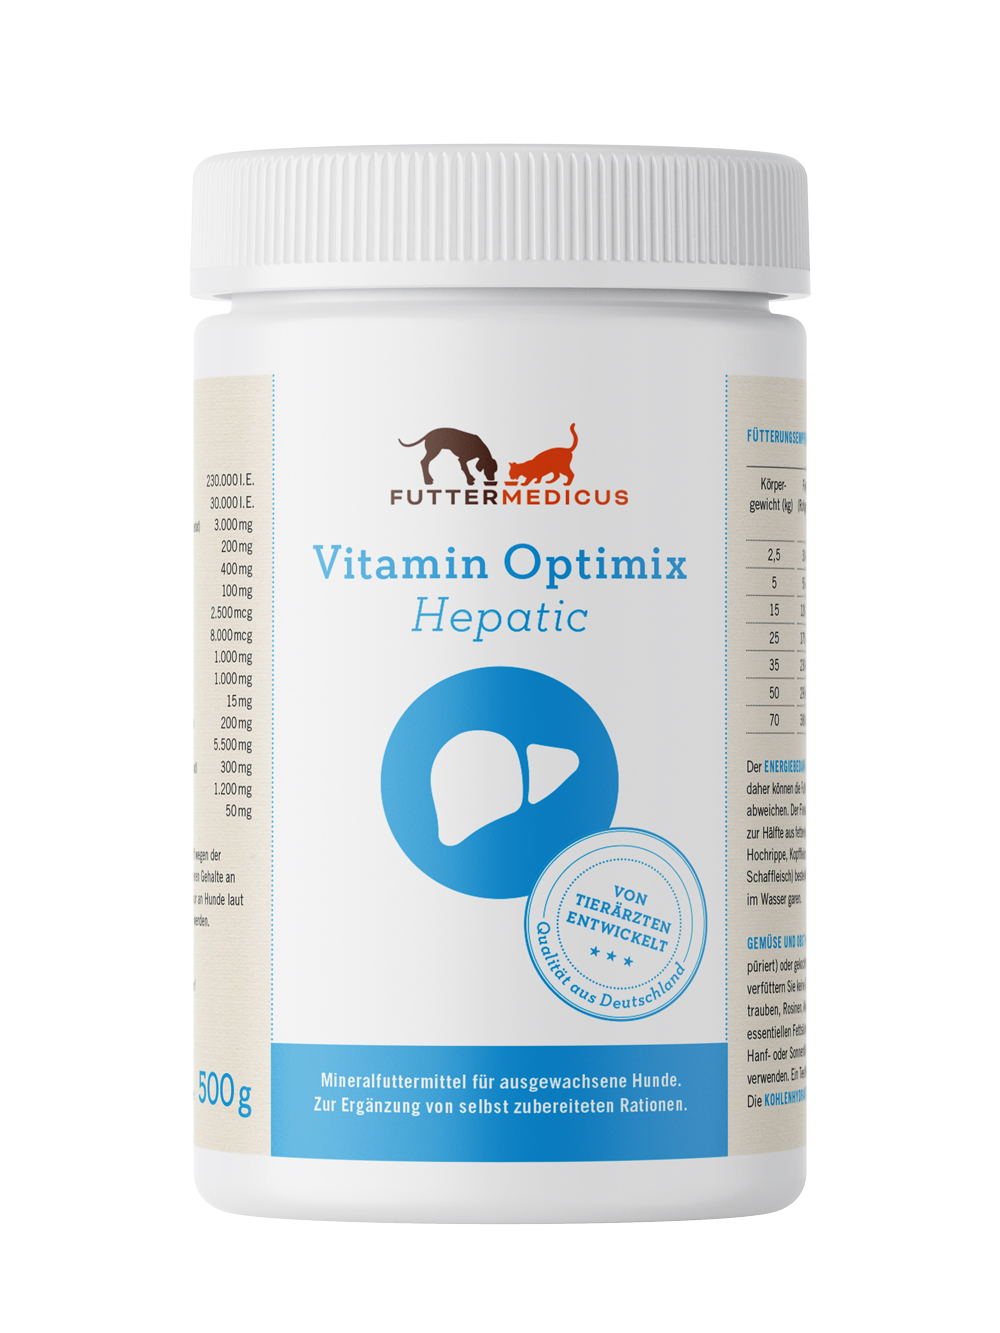  Vitamin Optimix Hepatic 500g / Futtermedicus